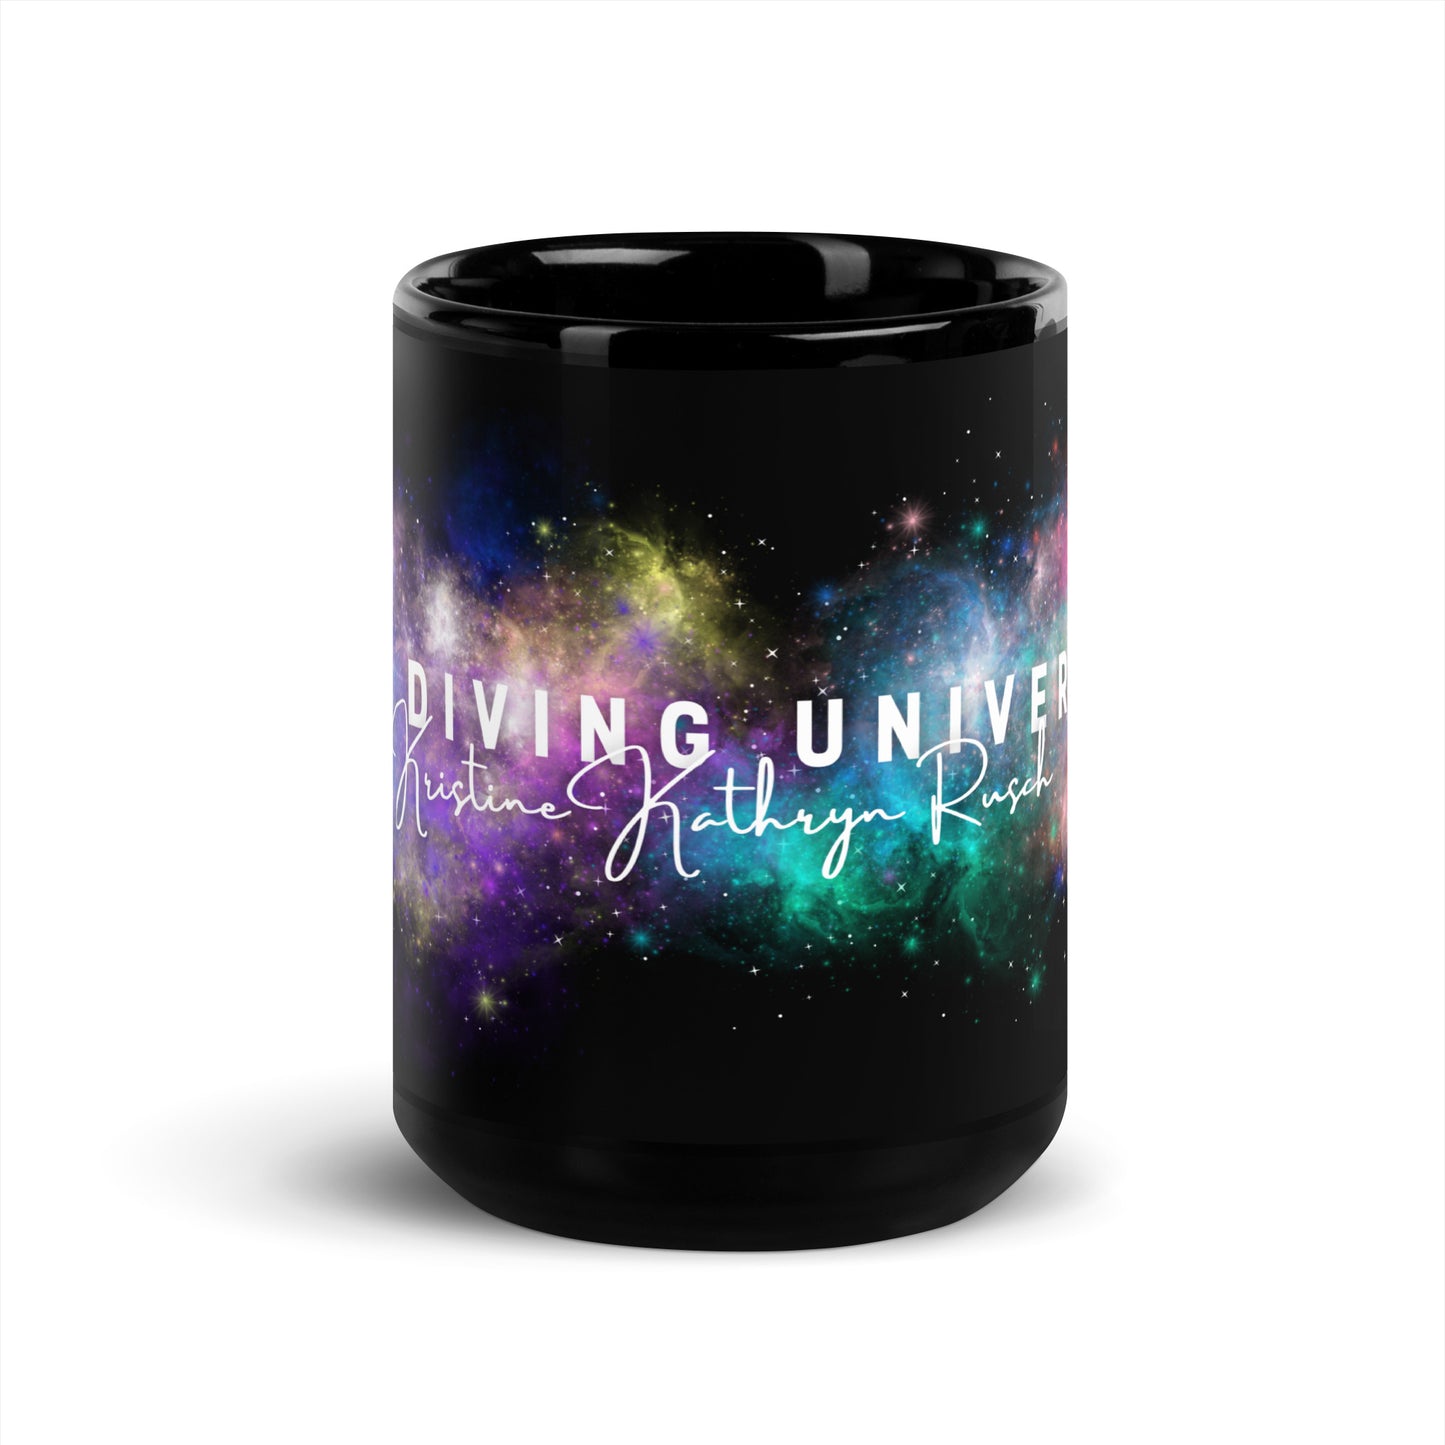 DIVING UNIVERSE NEBULA Black Glossy Mug - The Diving Universe by Kristine Kathryn Rusch